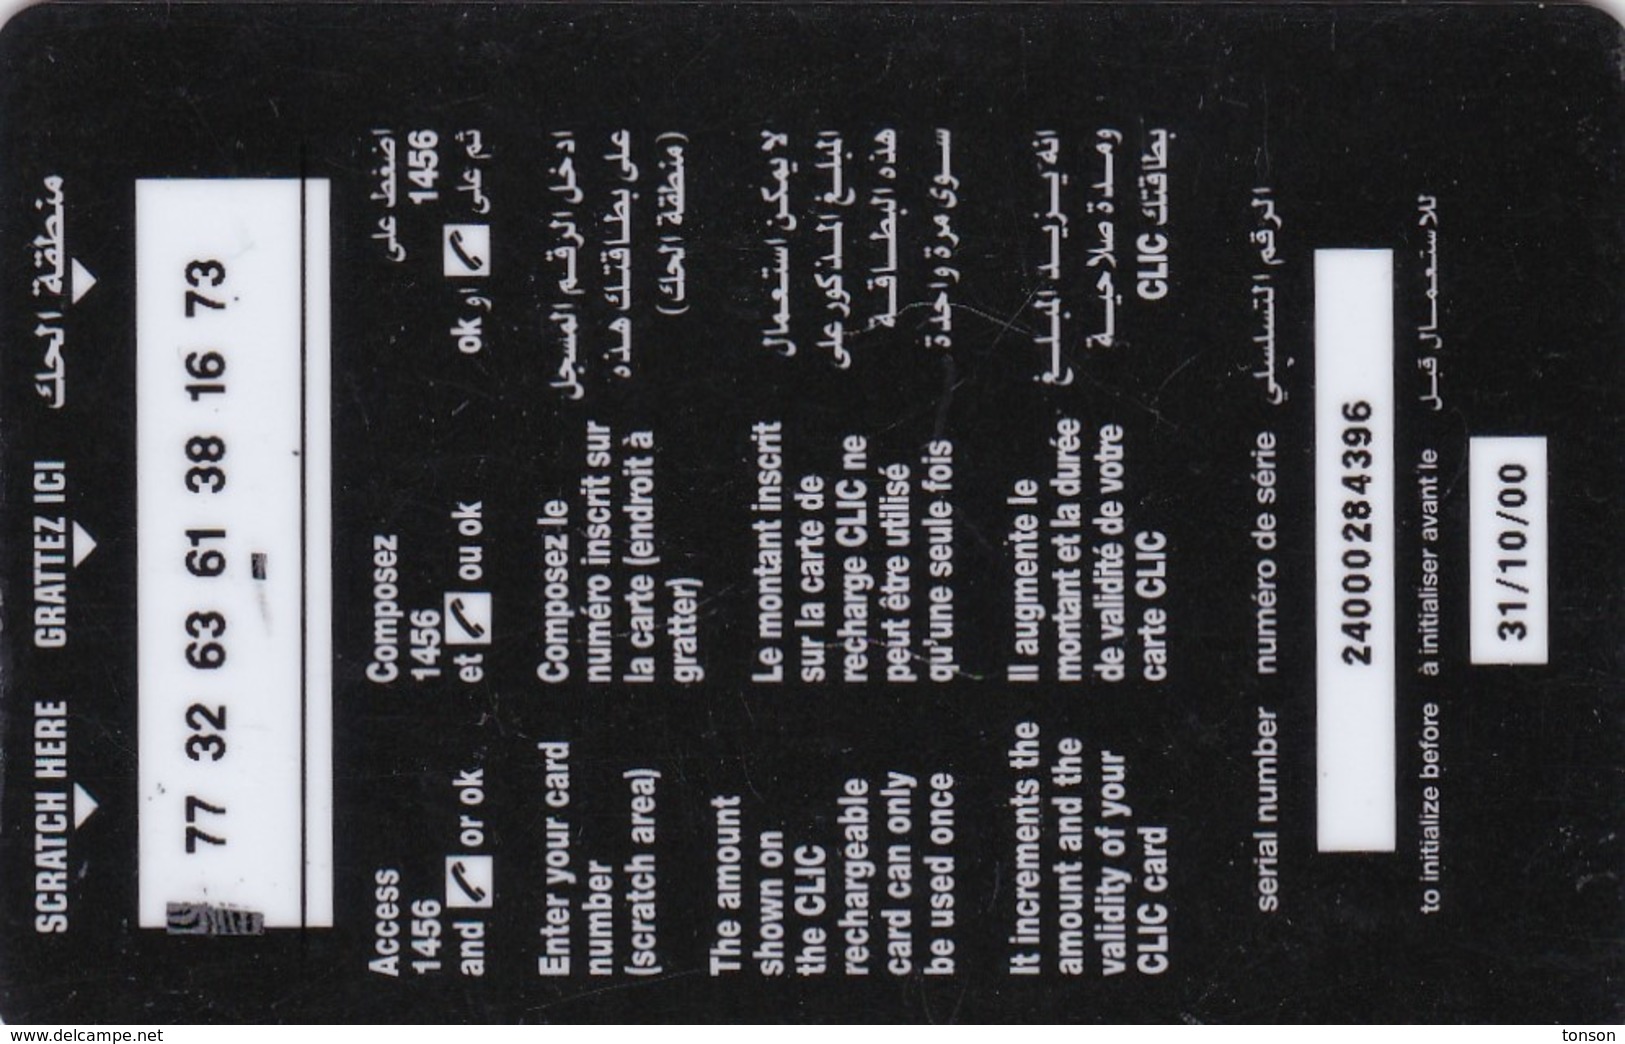 Lebanon, LB-CLC-REF-0014C, 44$, Clic Recharge Card, Family, 2 Scans.   Exp. : 31/10//00 - Lebanon